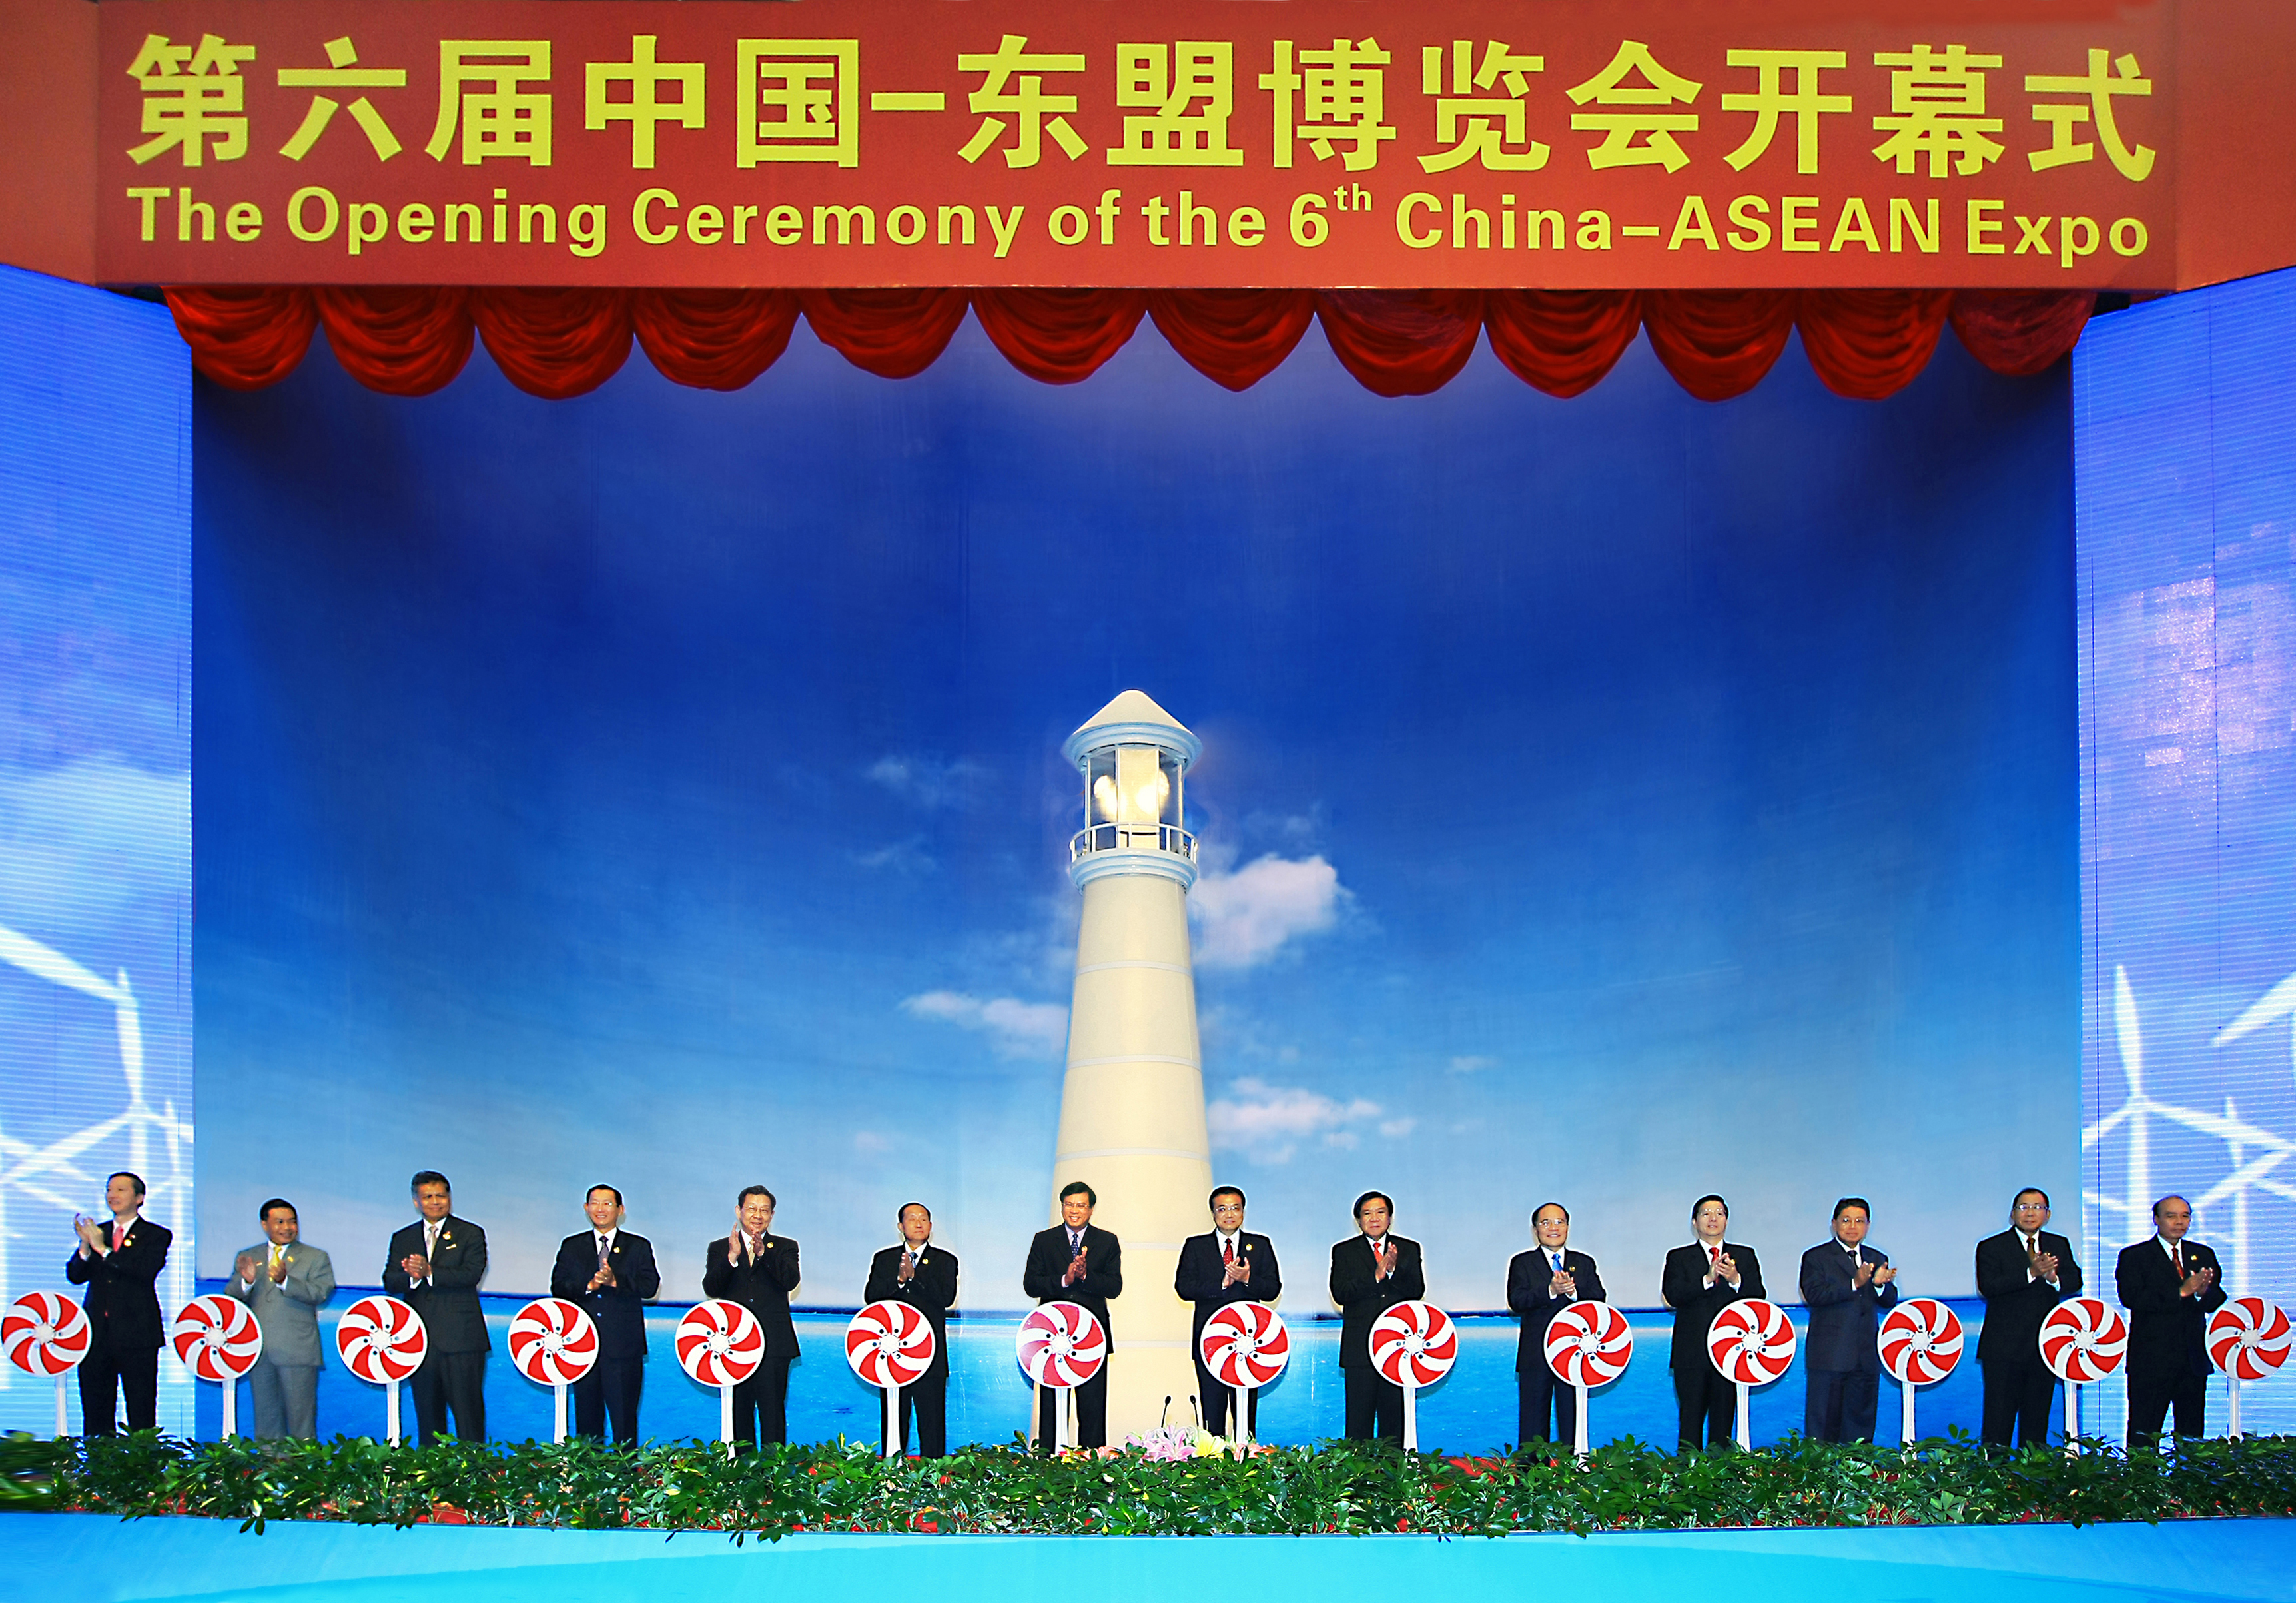 The sixth China-ASEAN Expo